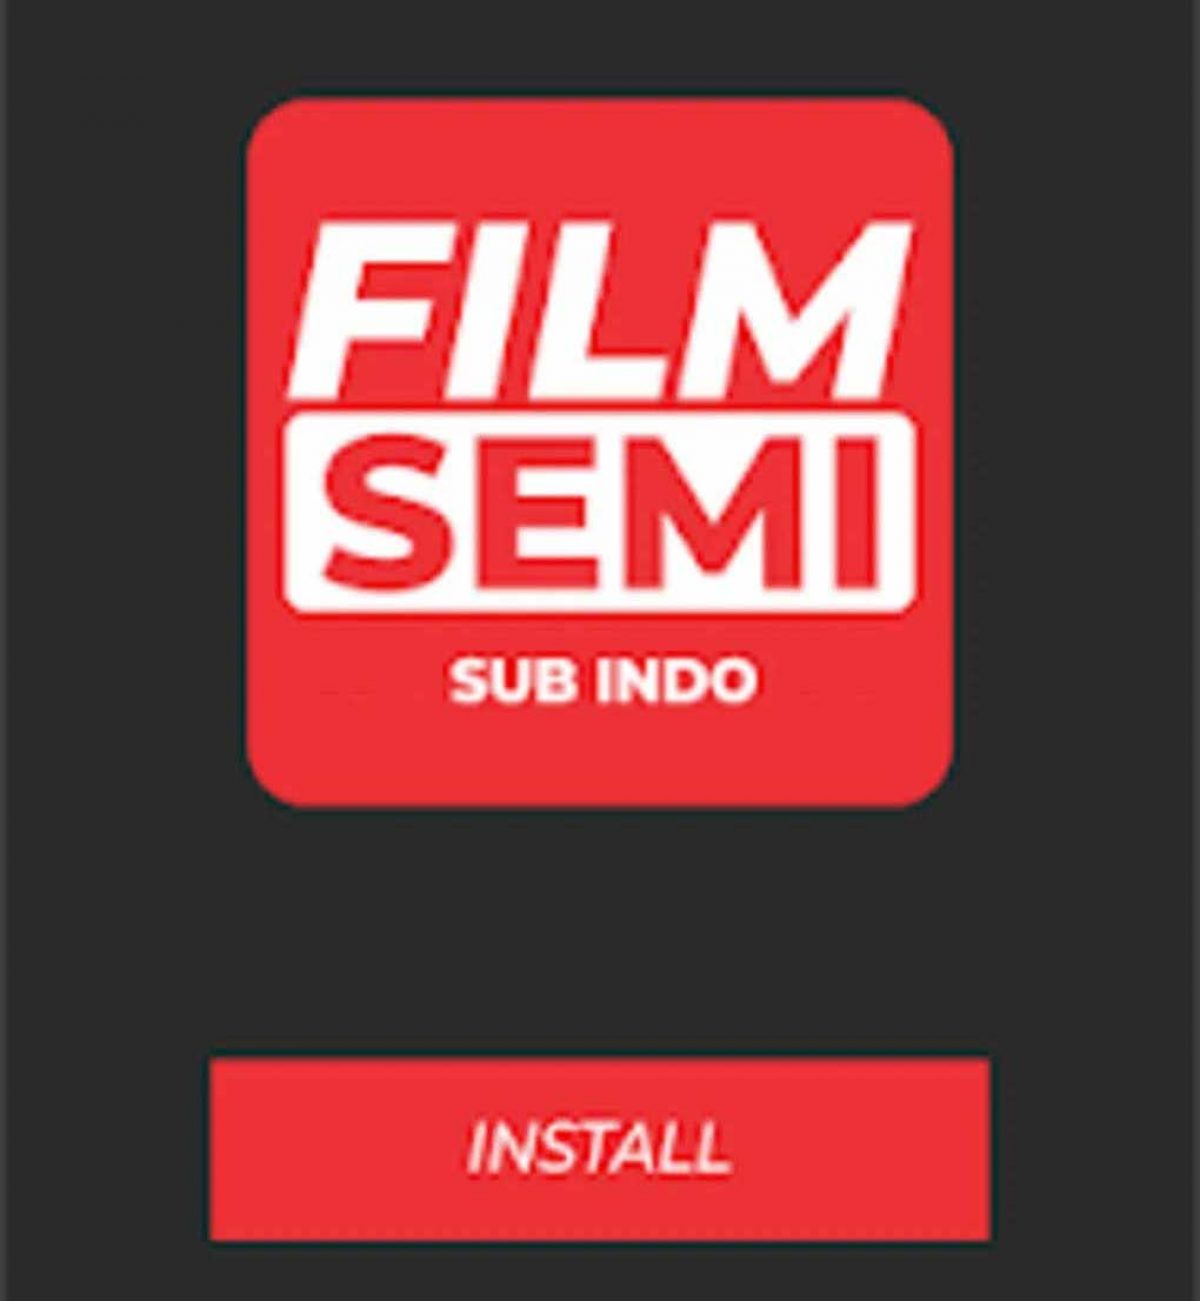 Nonton Film Semi Jepang No Sensor Nonton Film Semi Korea Terbaru Sub Indo Home Facebook 